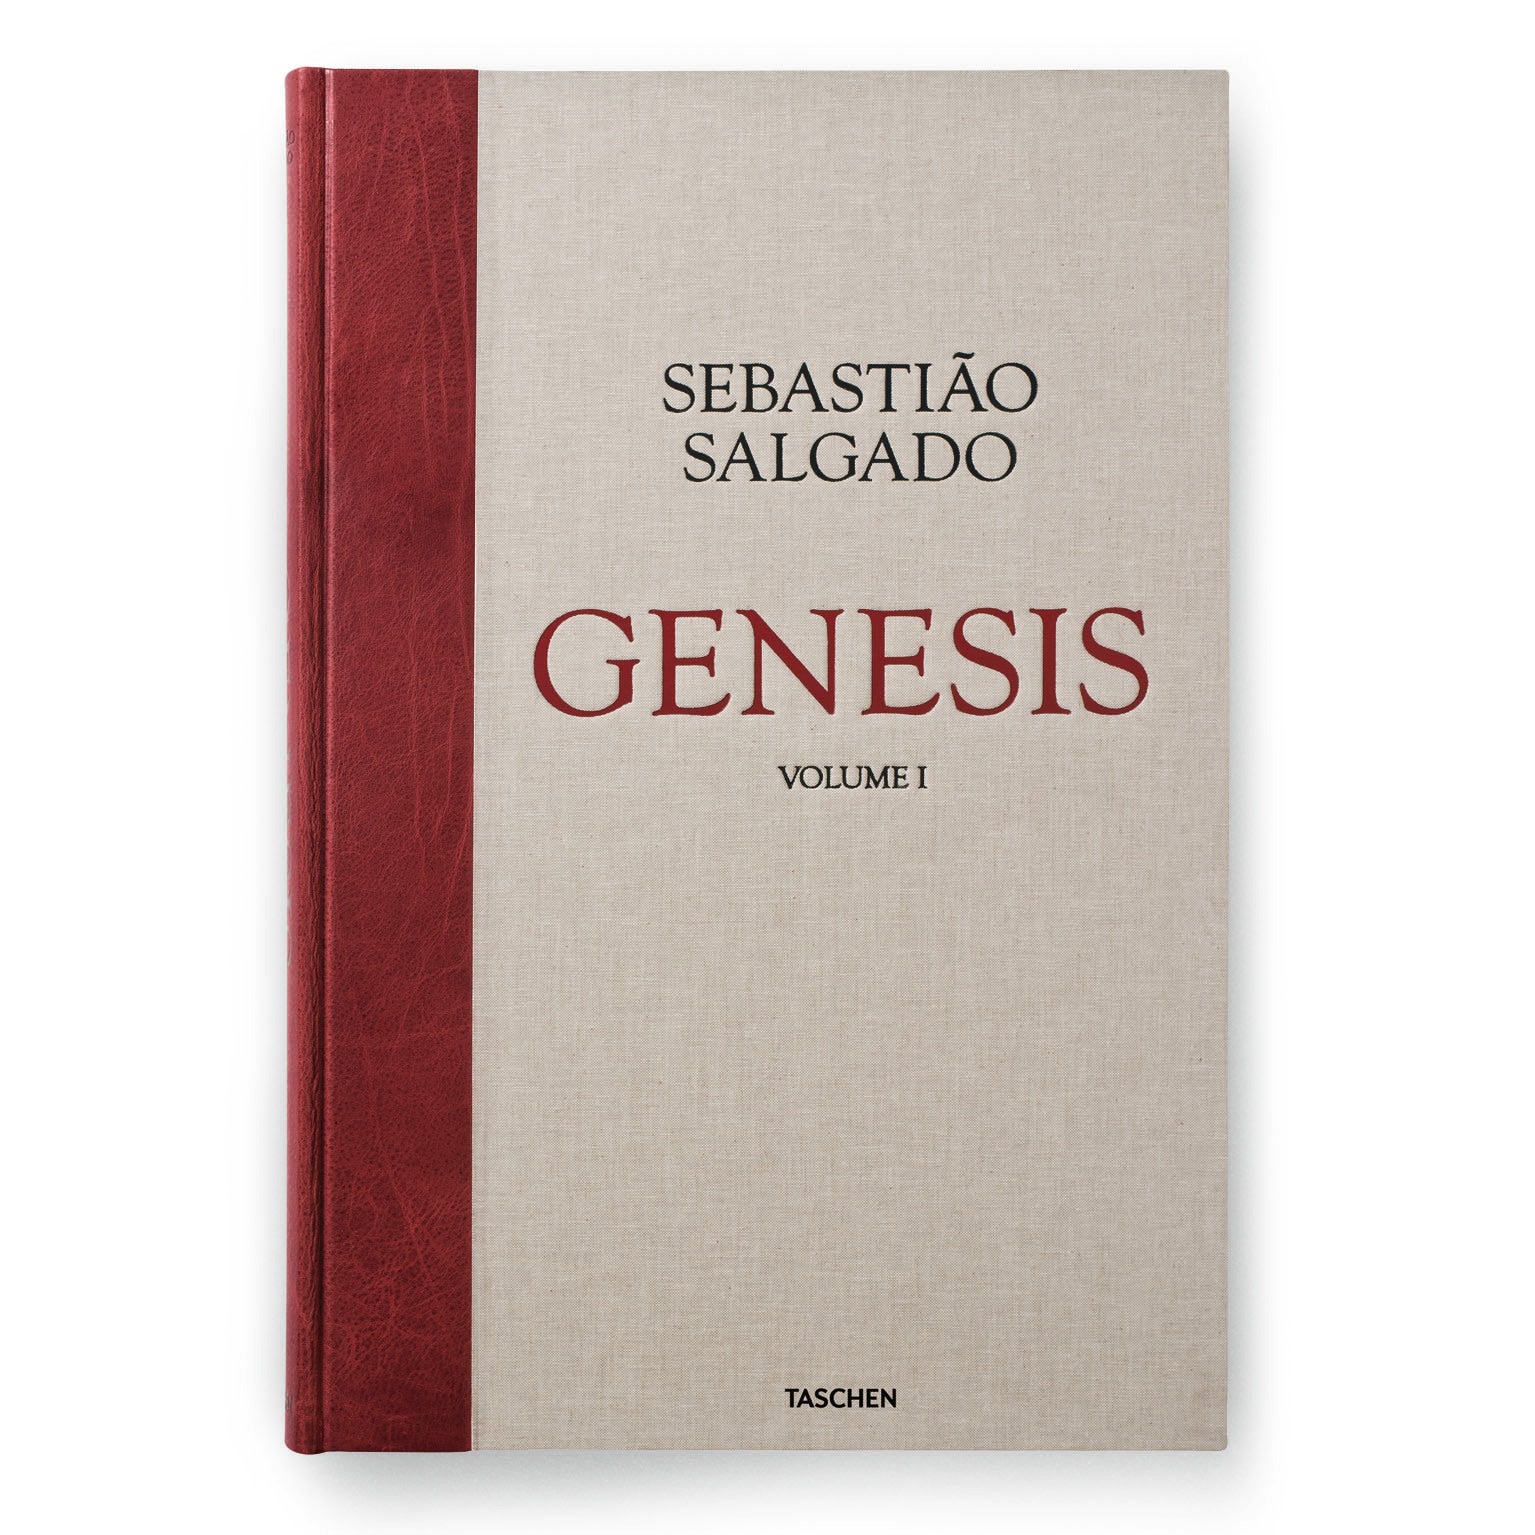 Sebastião Salgado "GENESIS" Signed, Limited Edition SUMO Book, with stand For Sale